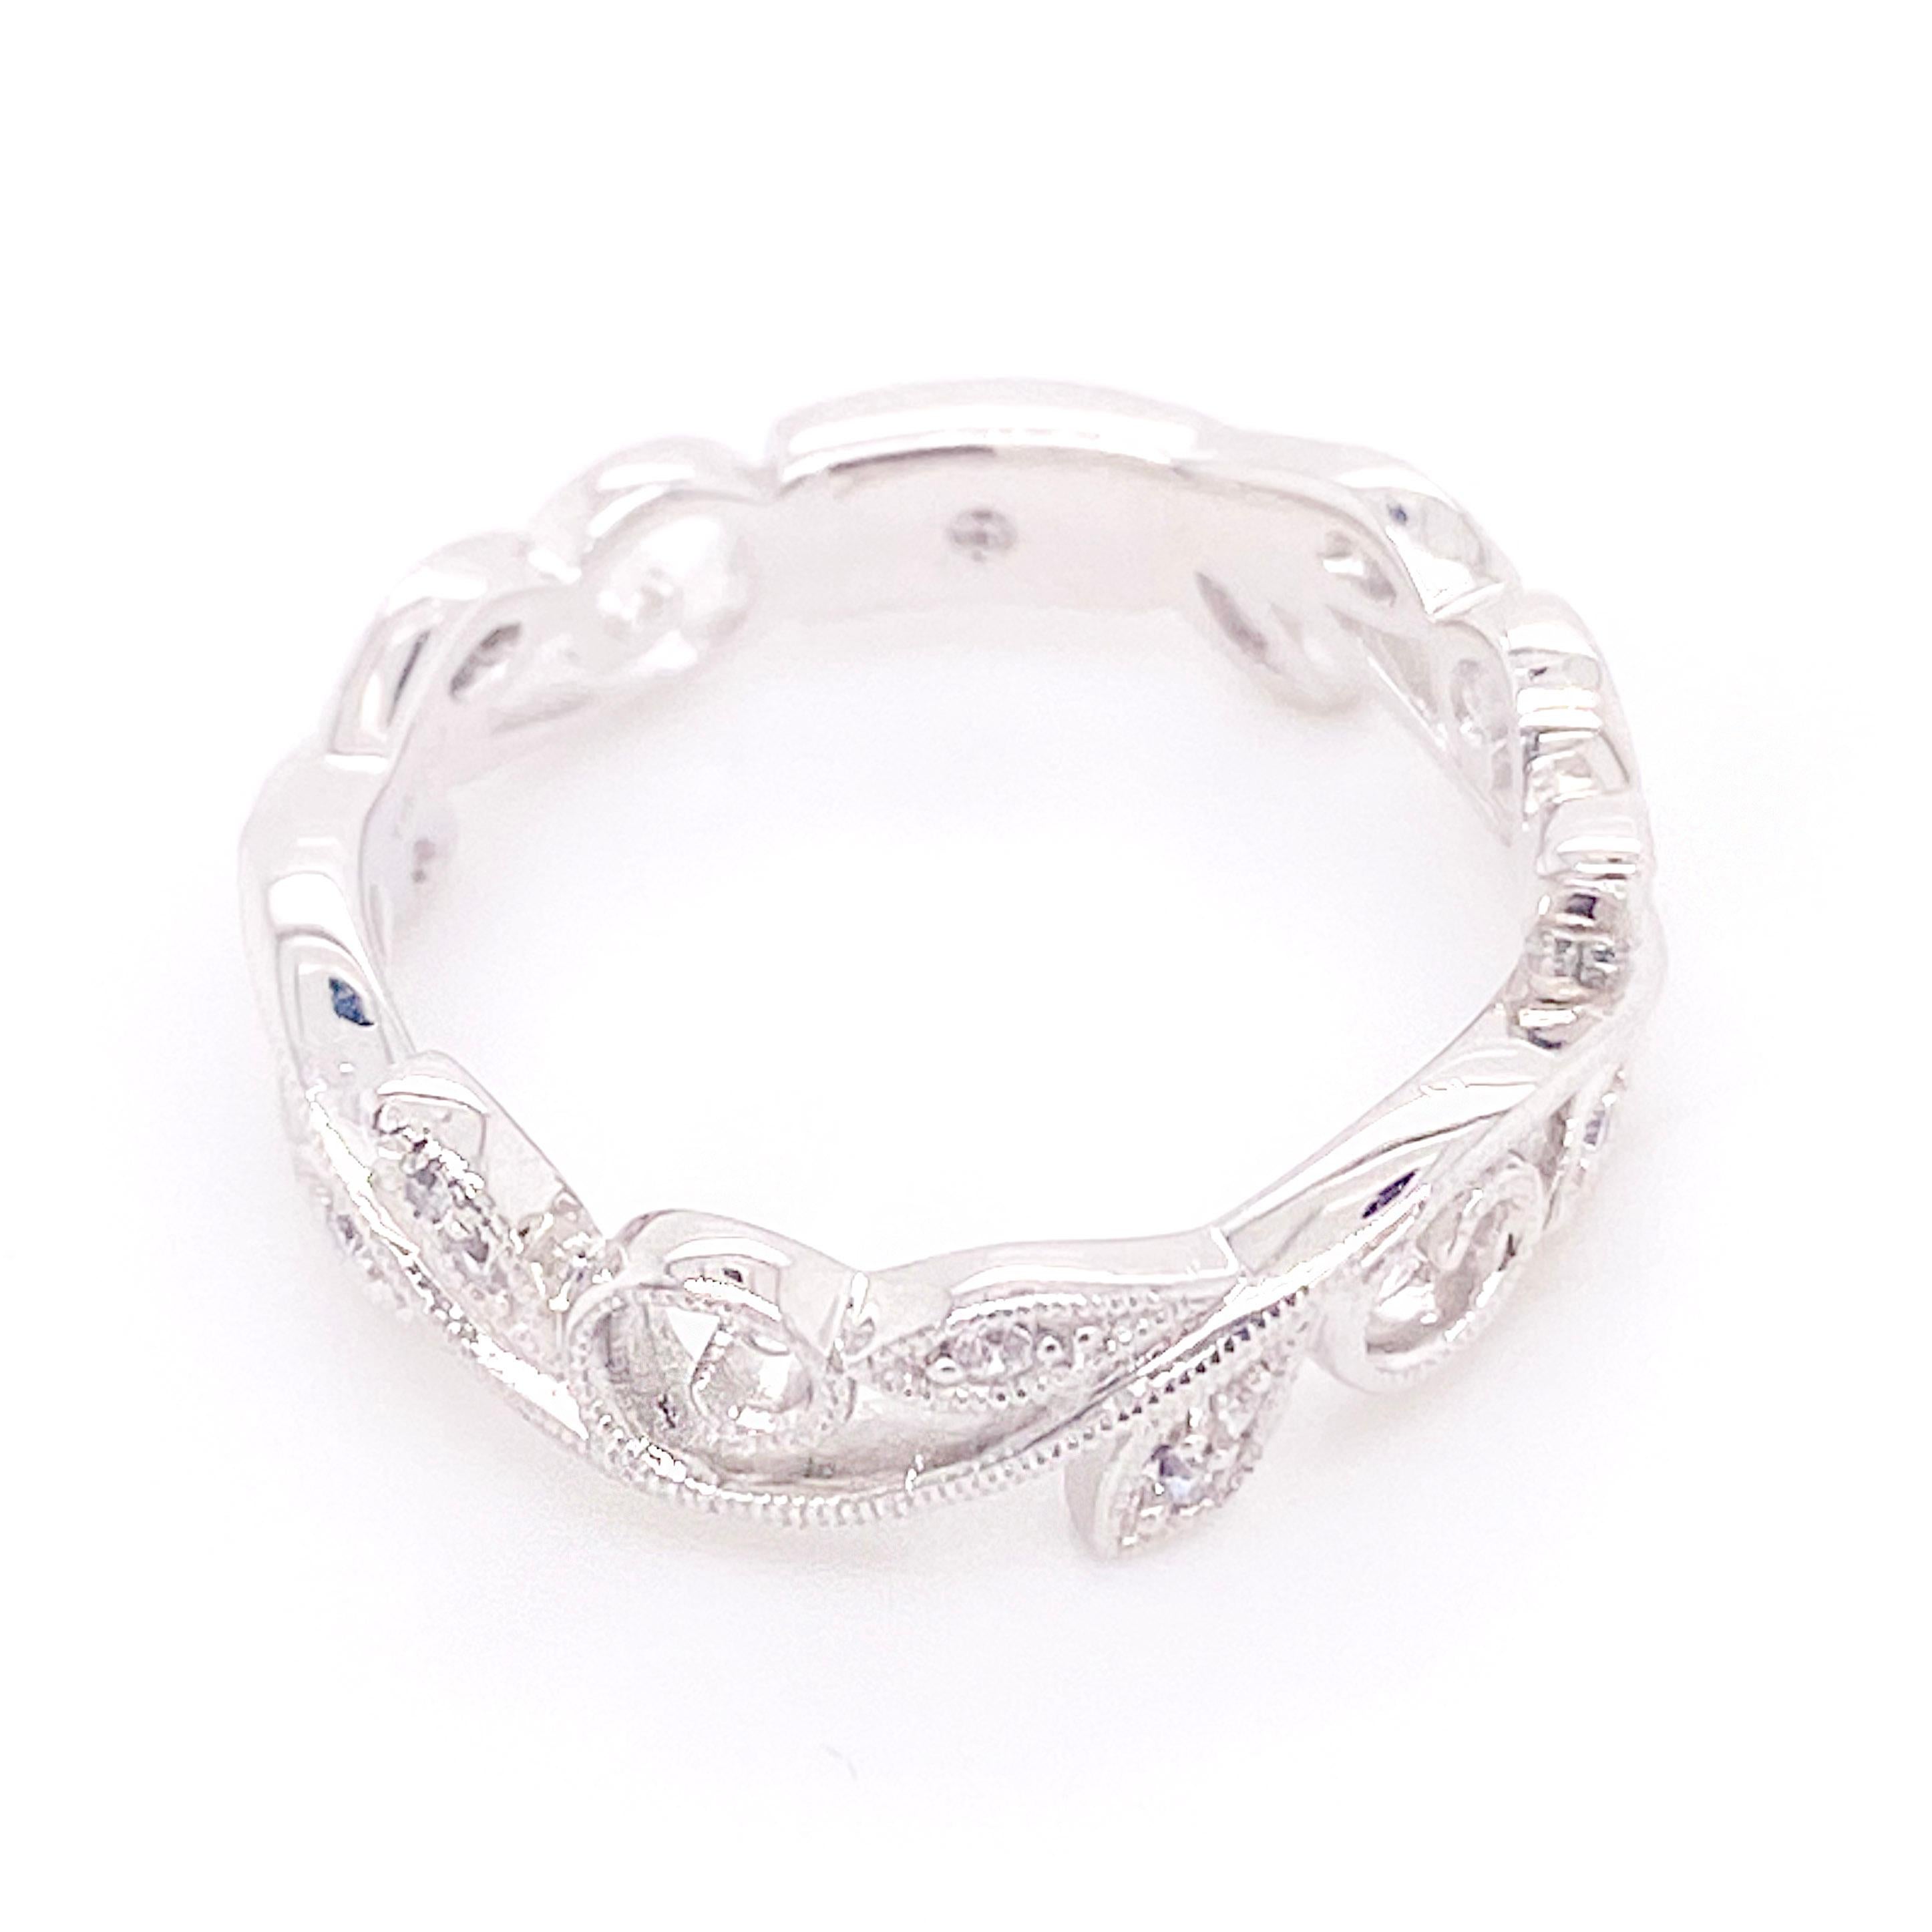 For Sale:  Flower Leaf Ring W Filigree Design W Diamonds & 14k White Gold, Ring is Sizable 3